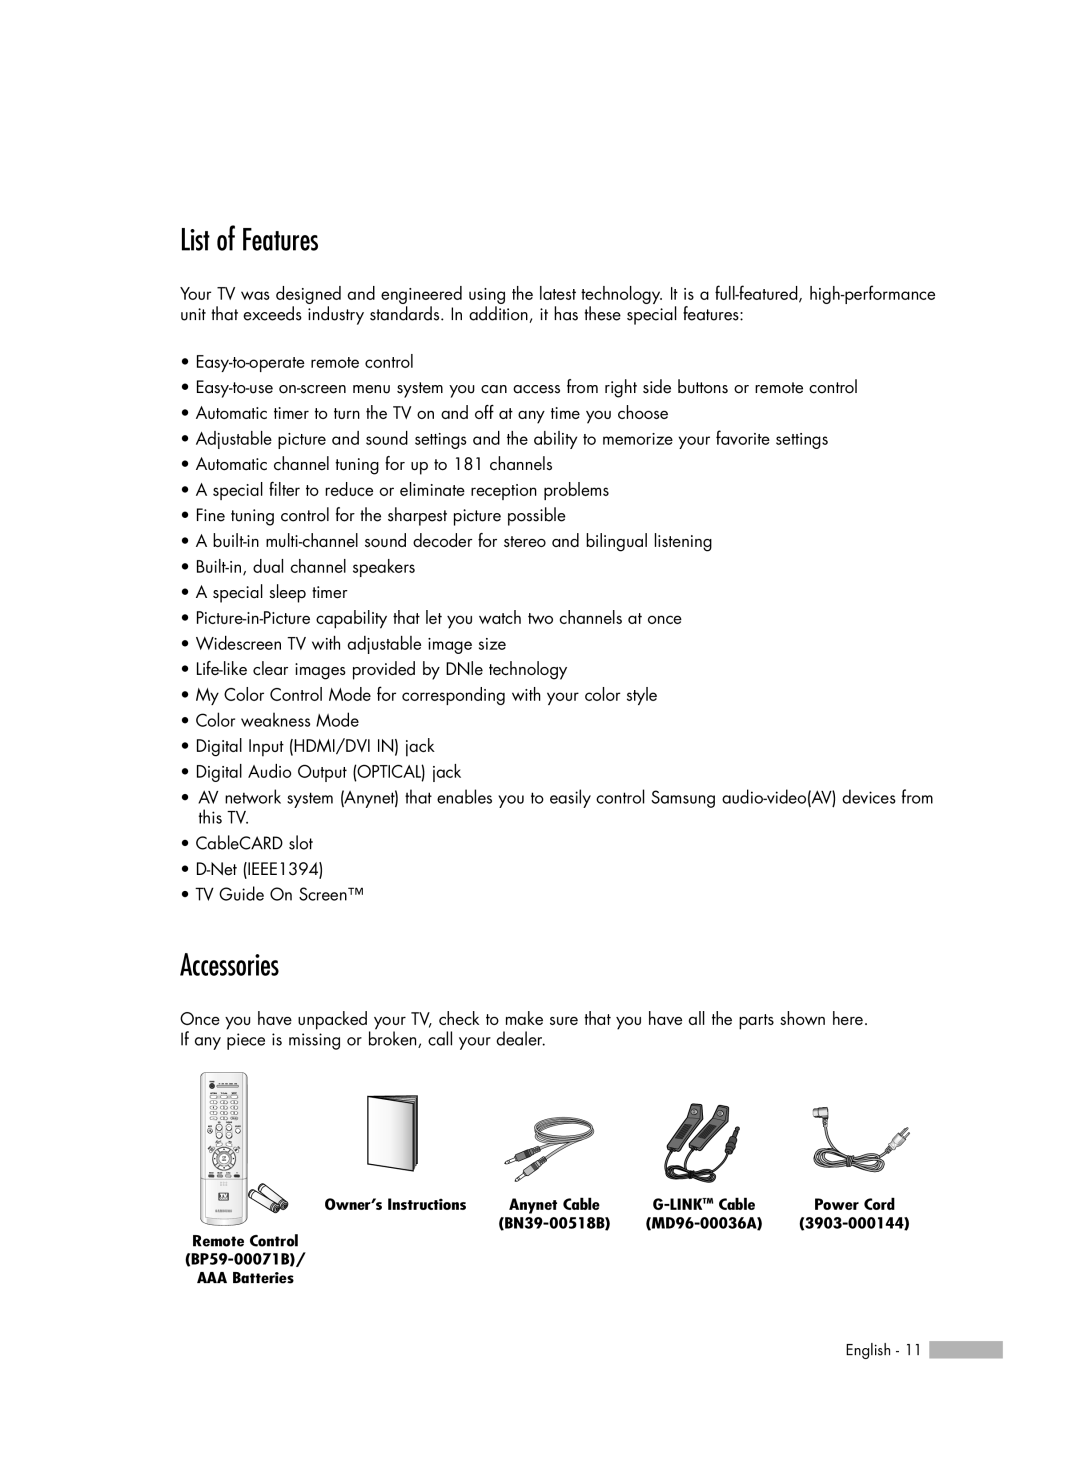 Samsung HL-R5667W, HL-R6167W, HL-R5067W manual List of Features, Accessories 